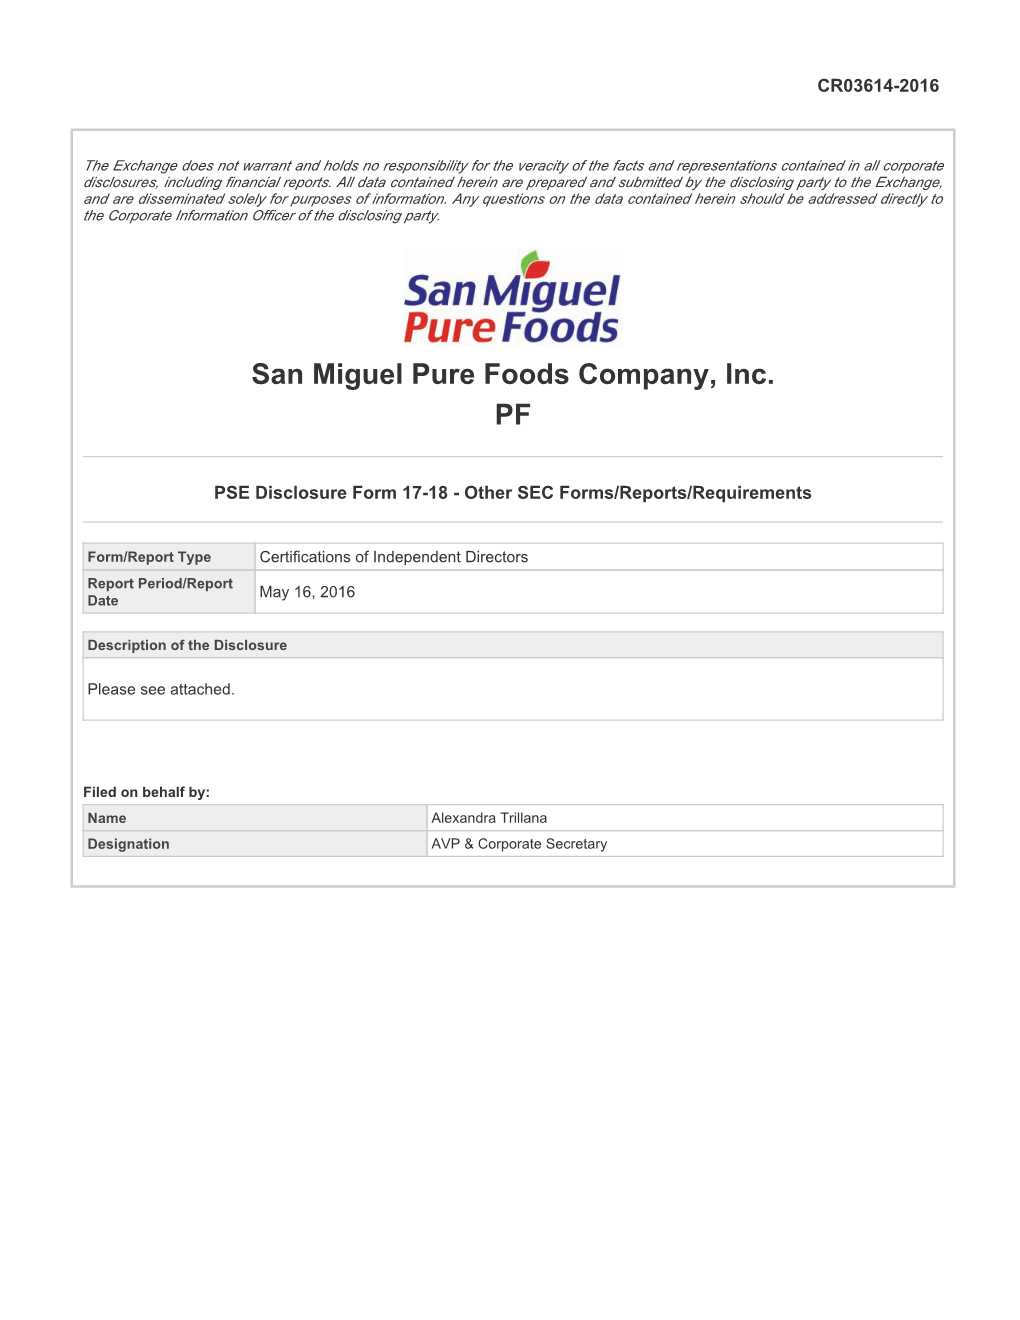 San Miguel Pure Foods Company, Inc. PF